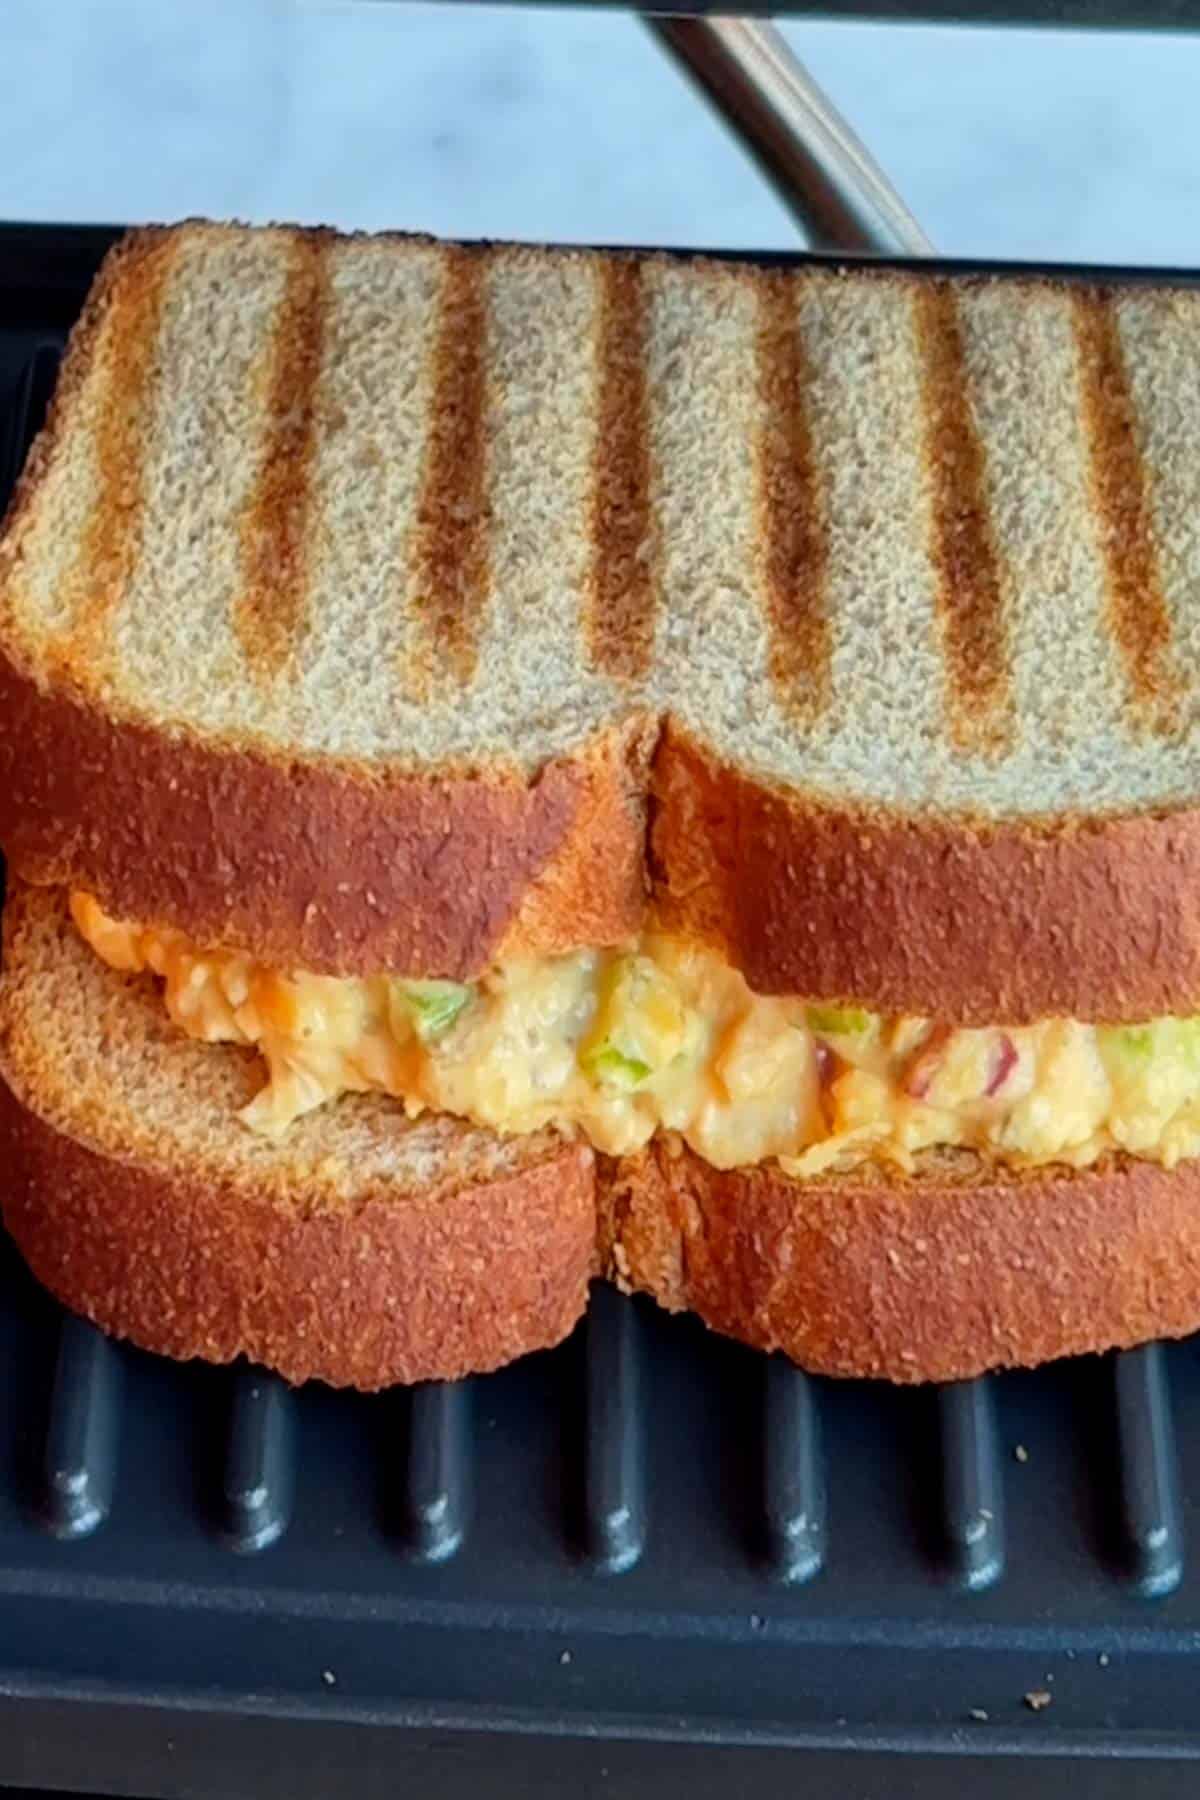 Vegan tuna sandwich with grilled whole wheat bread in a sandwich press.